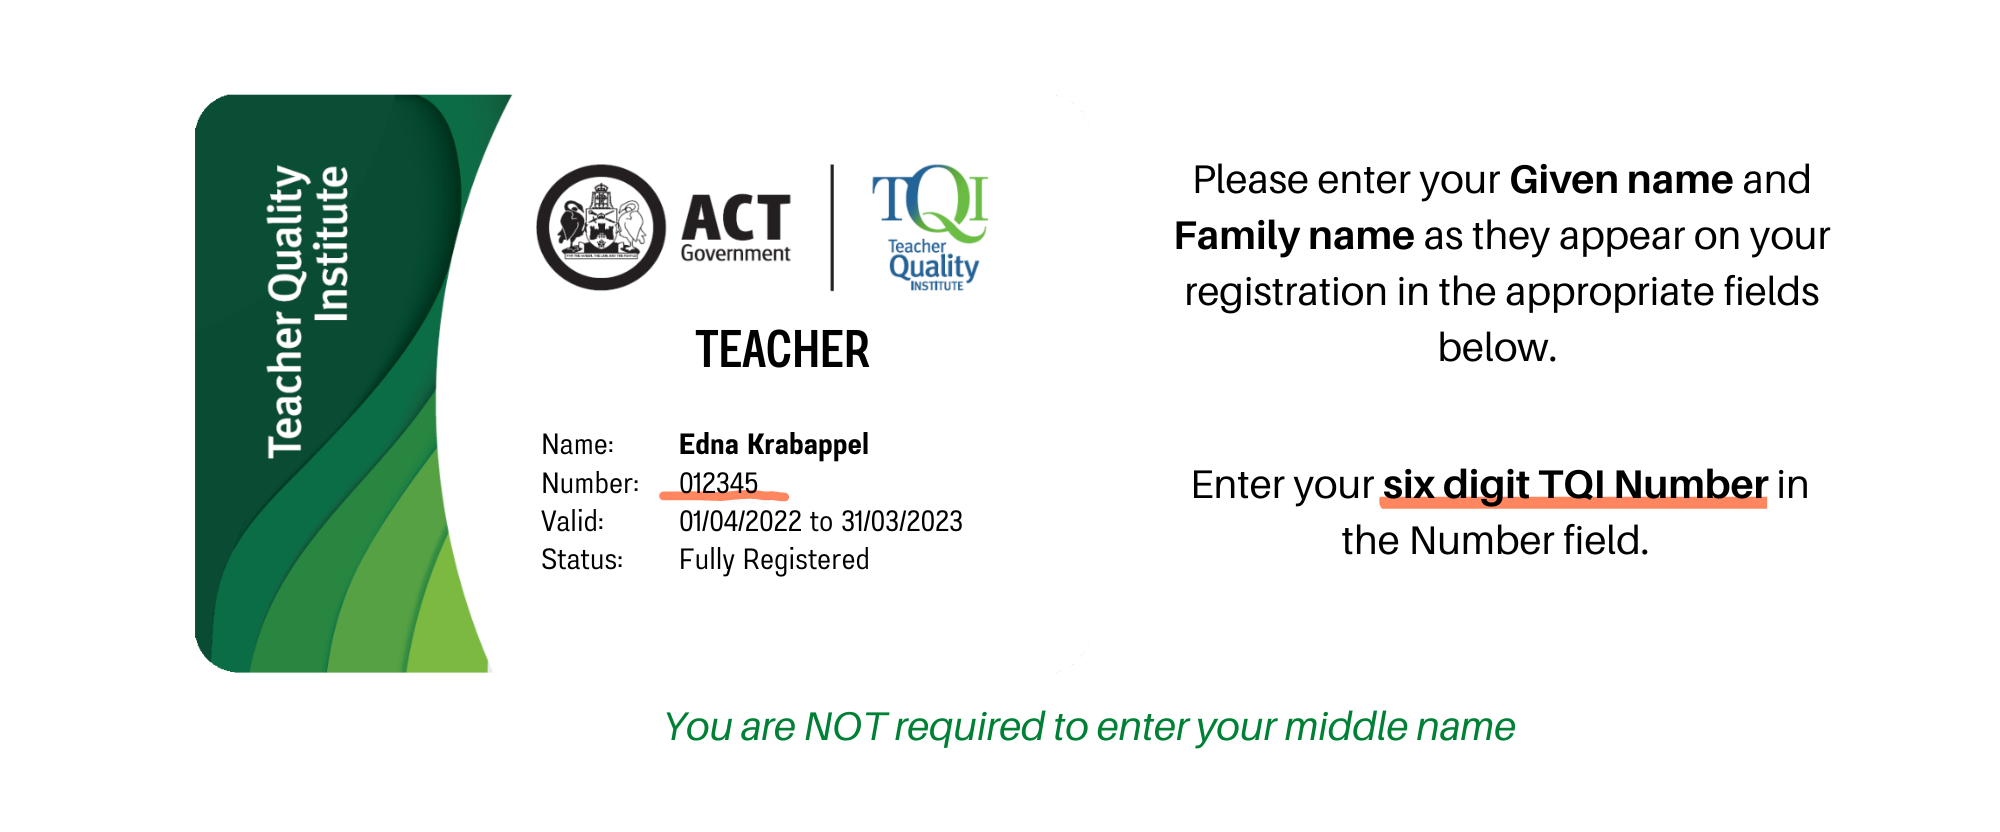 Teacher Registration Card Image